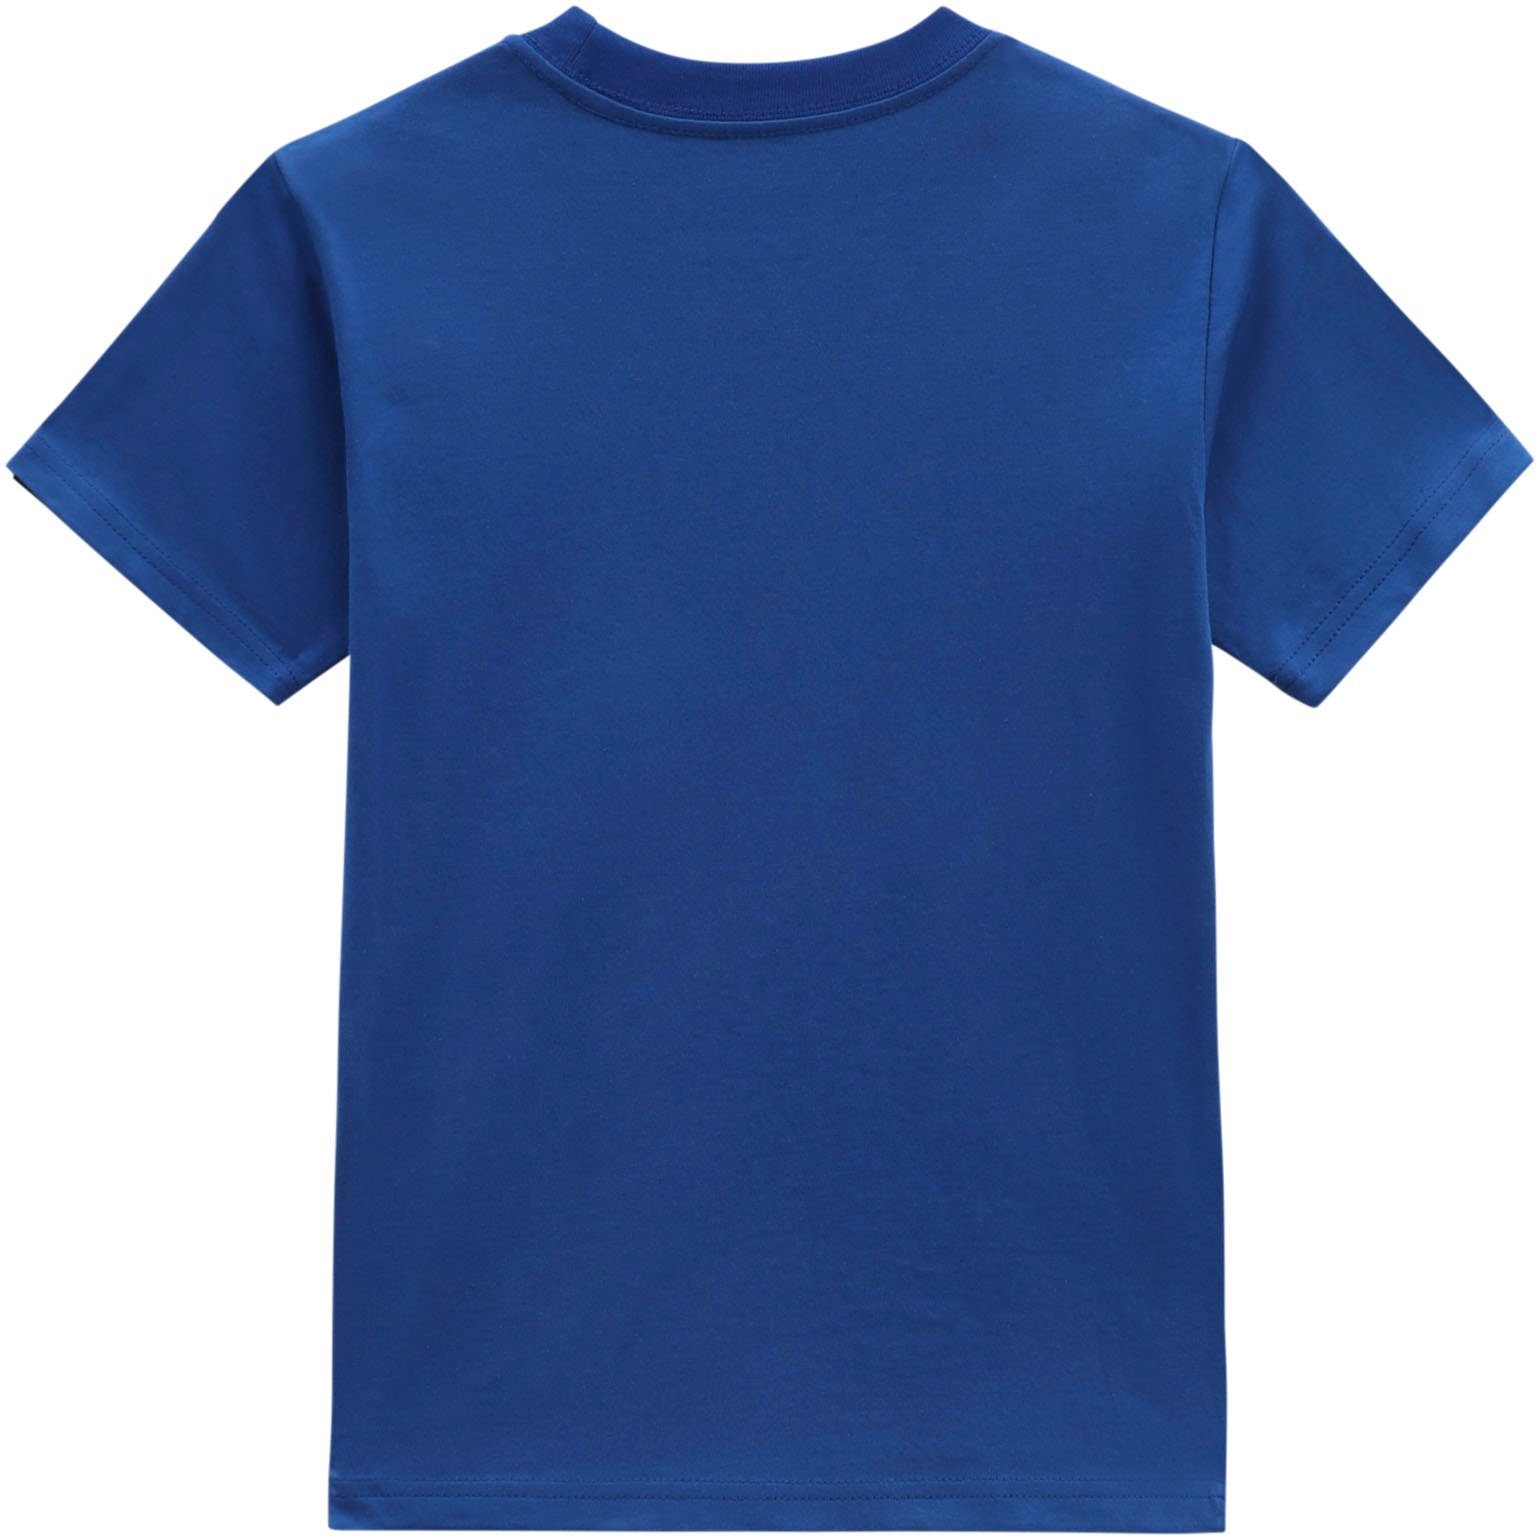 CLASSIC BY KIDS blue/ VANS white Vans T-Shirt